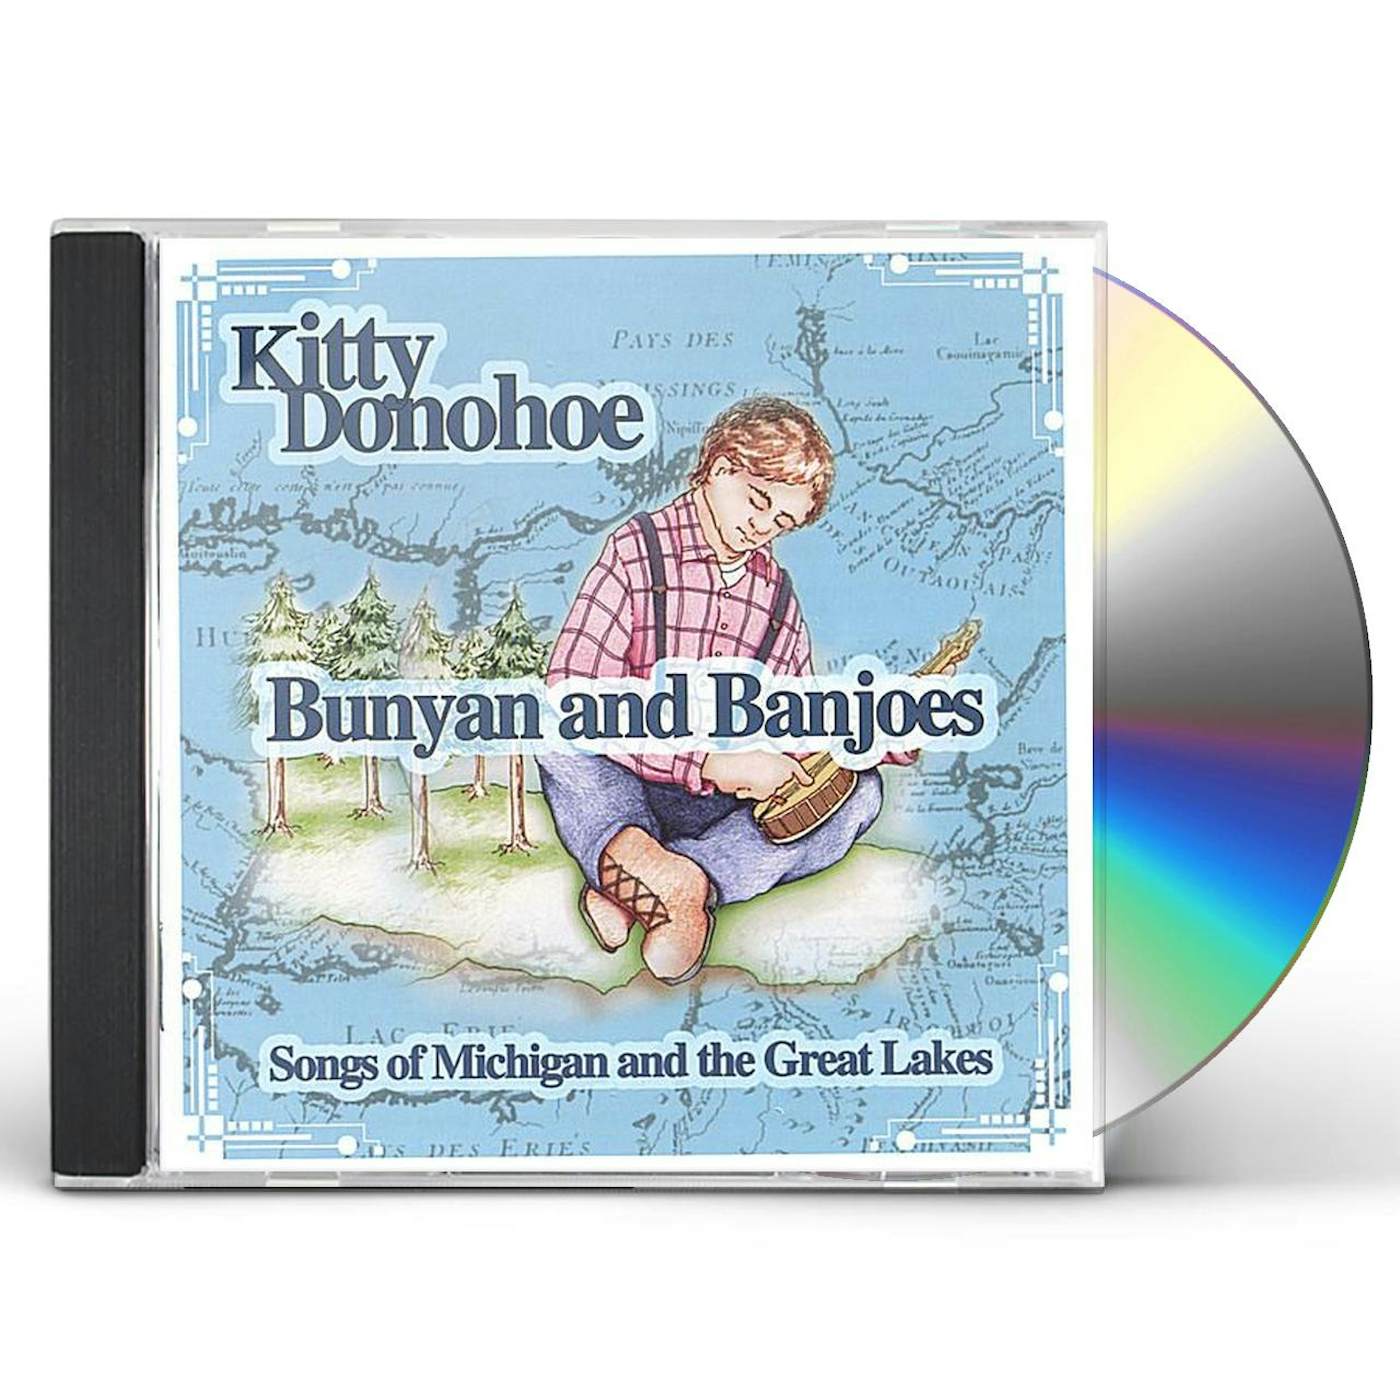 Kitty Donohoe BUNYAN & BANJOES CD